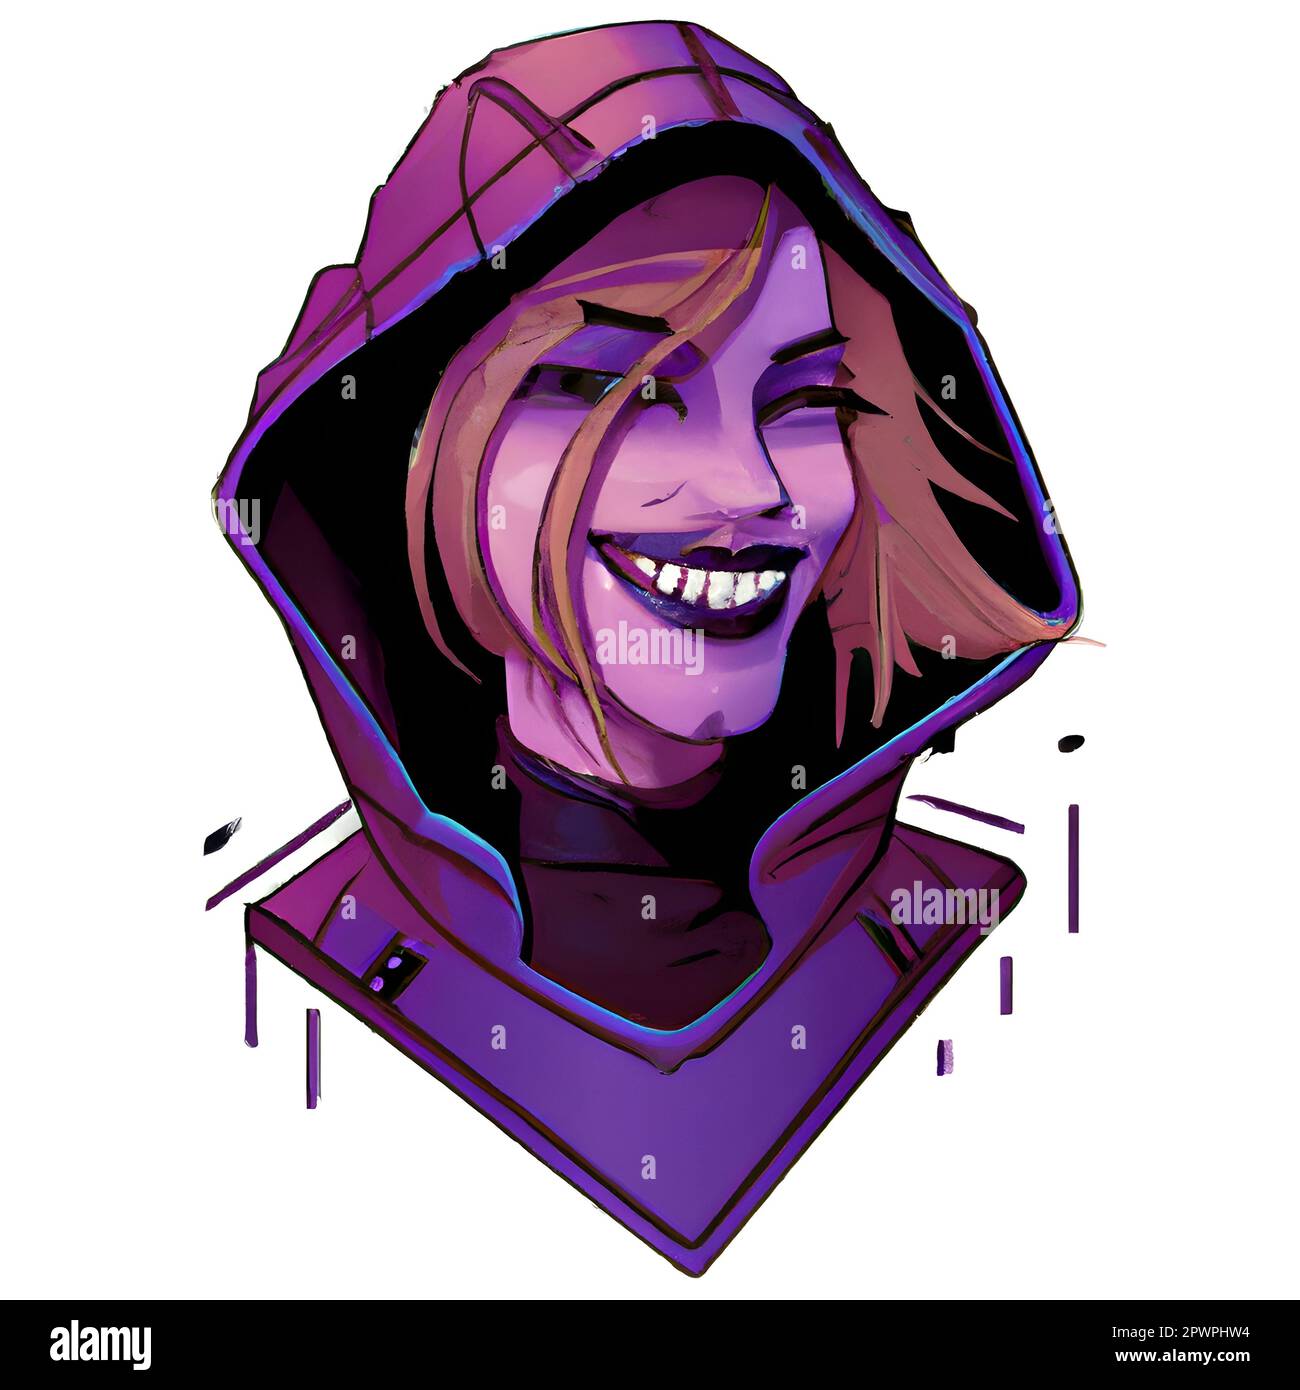 Illustration of creepy smiling woman face, cyberpunk style illustration. Stock Photo